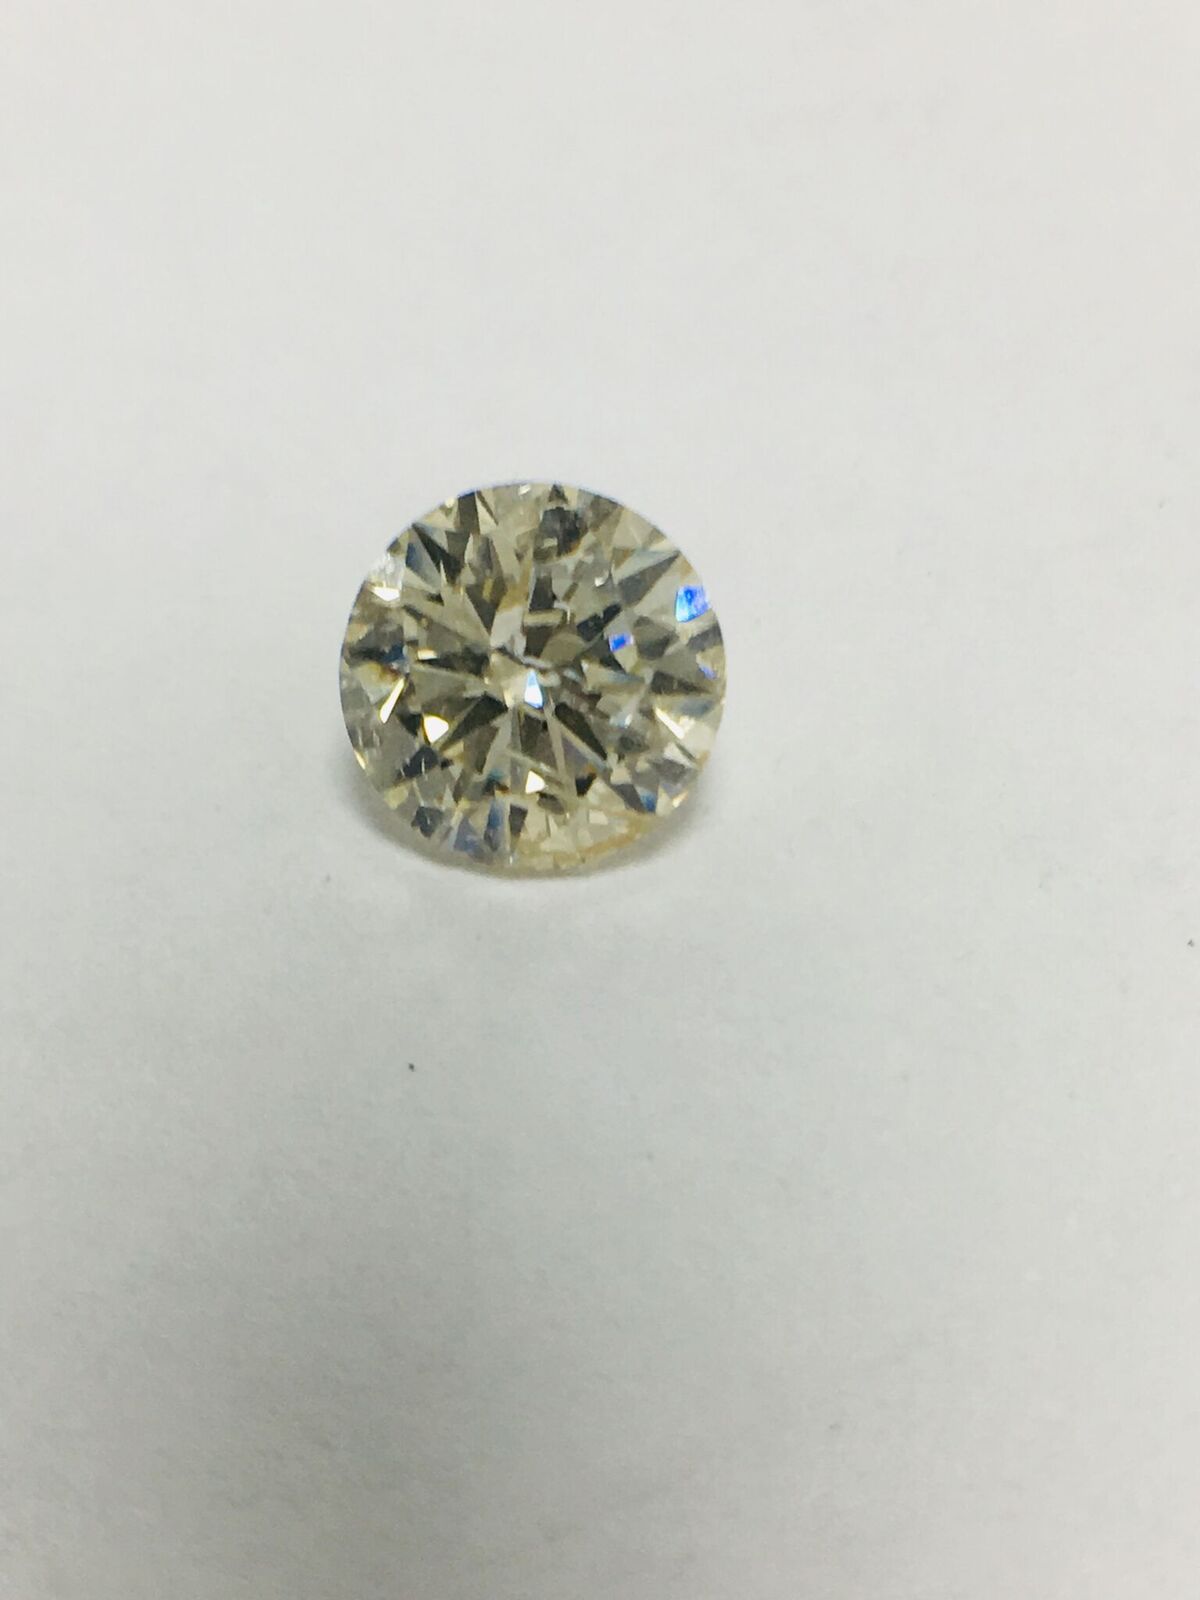 1.55ct Natural Brilliant cut DiamondSI2 clarity - Image 4 of 35